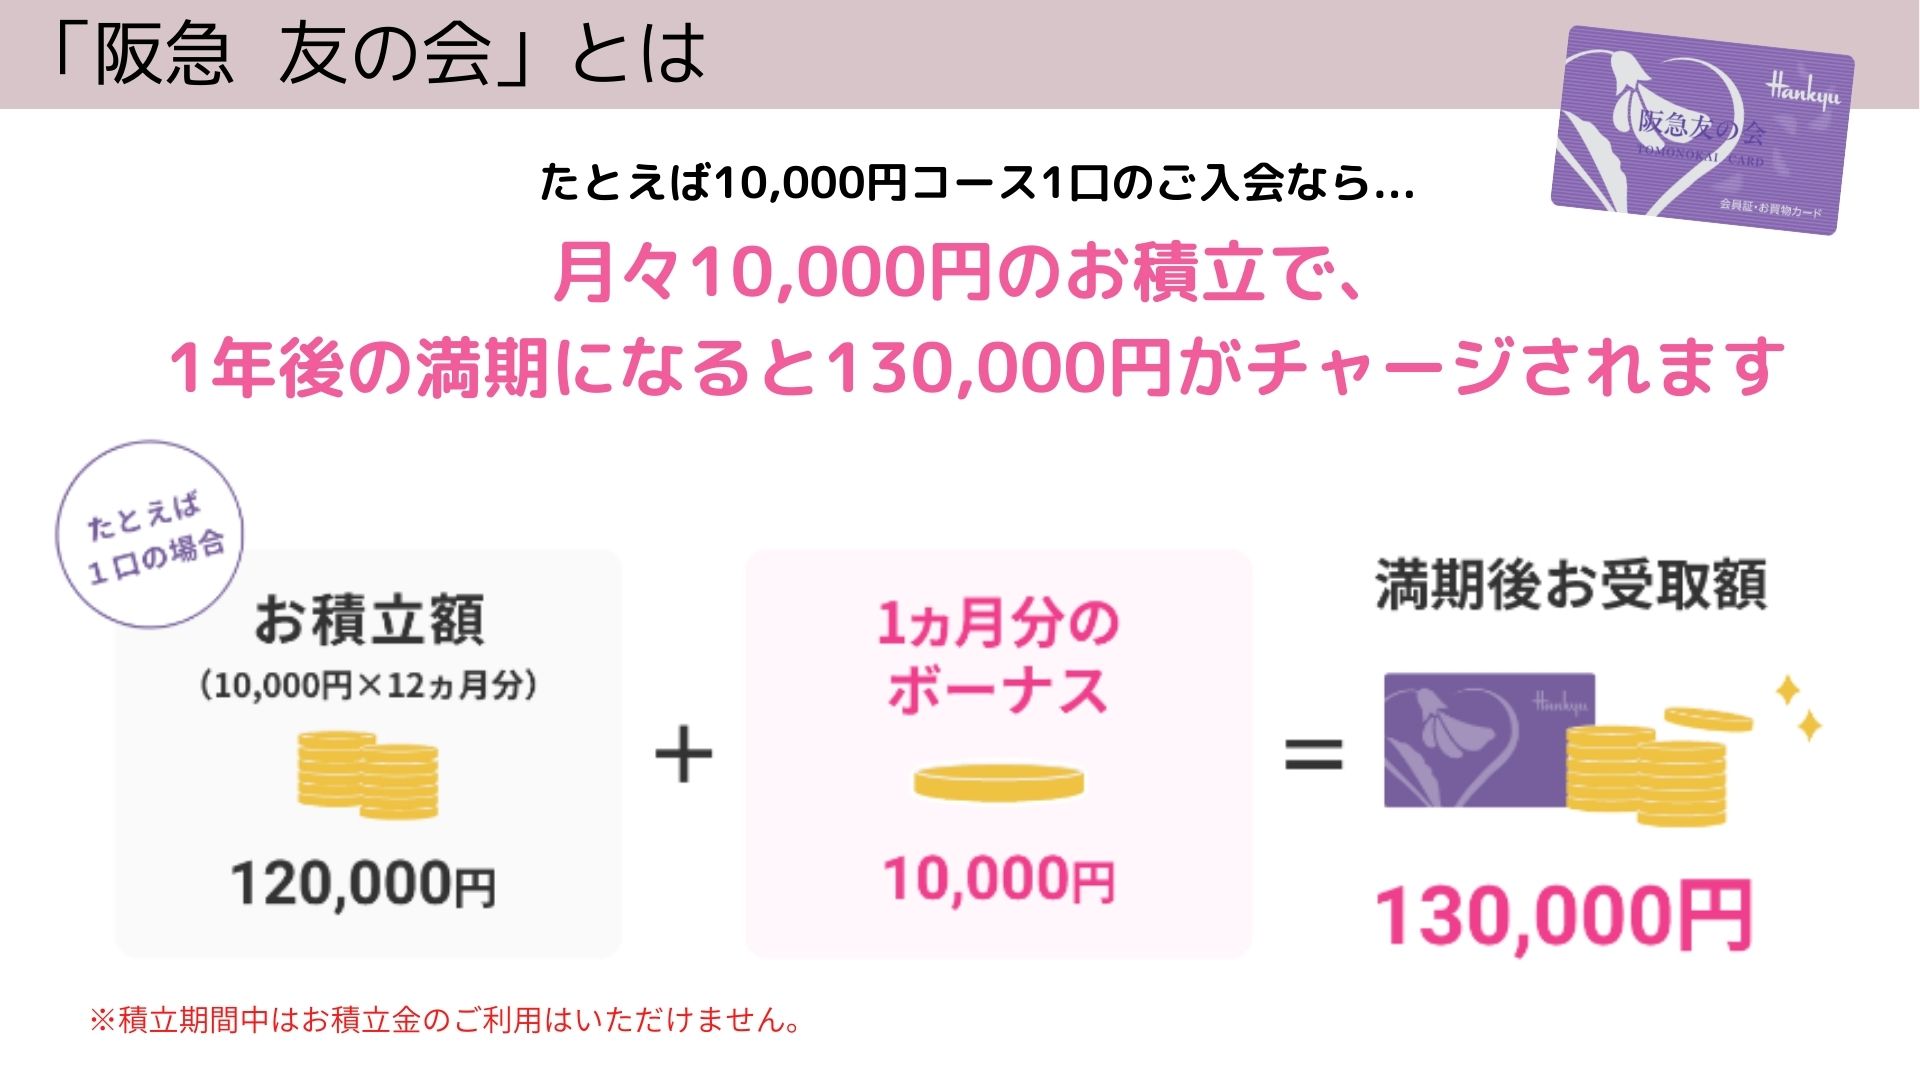 阪急友の会5万円分 12-5優待券/割引券